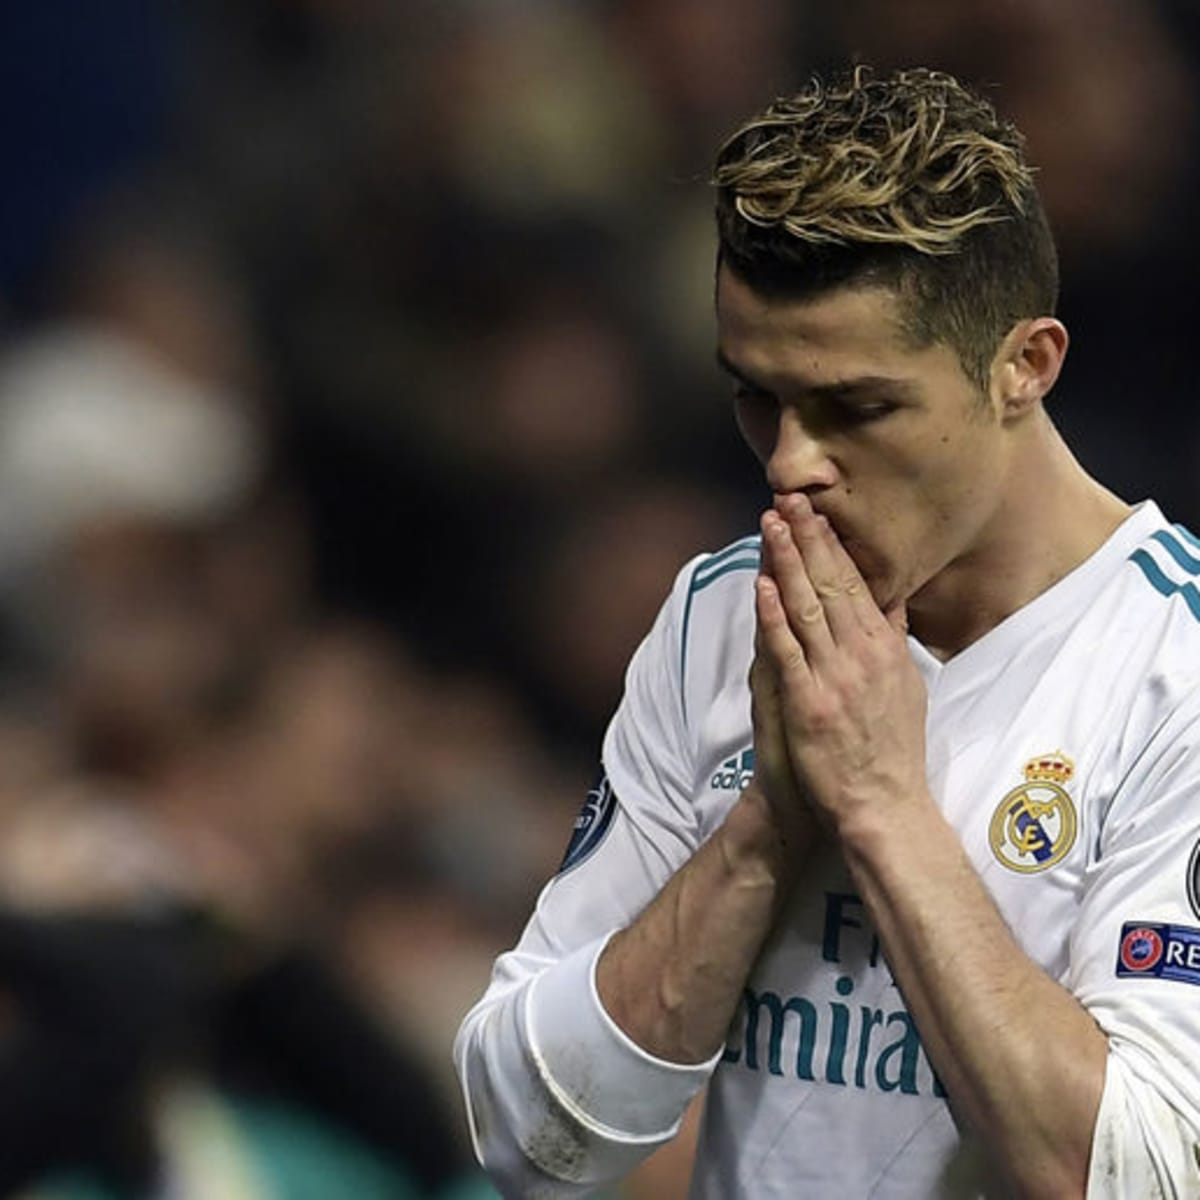 Champions League: Cristiano Ronaldo's penalty puts Real Madrid past Juventus